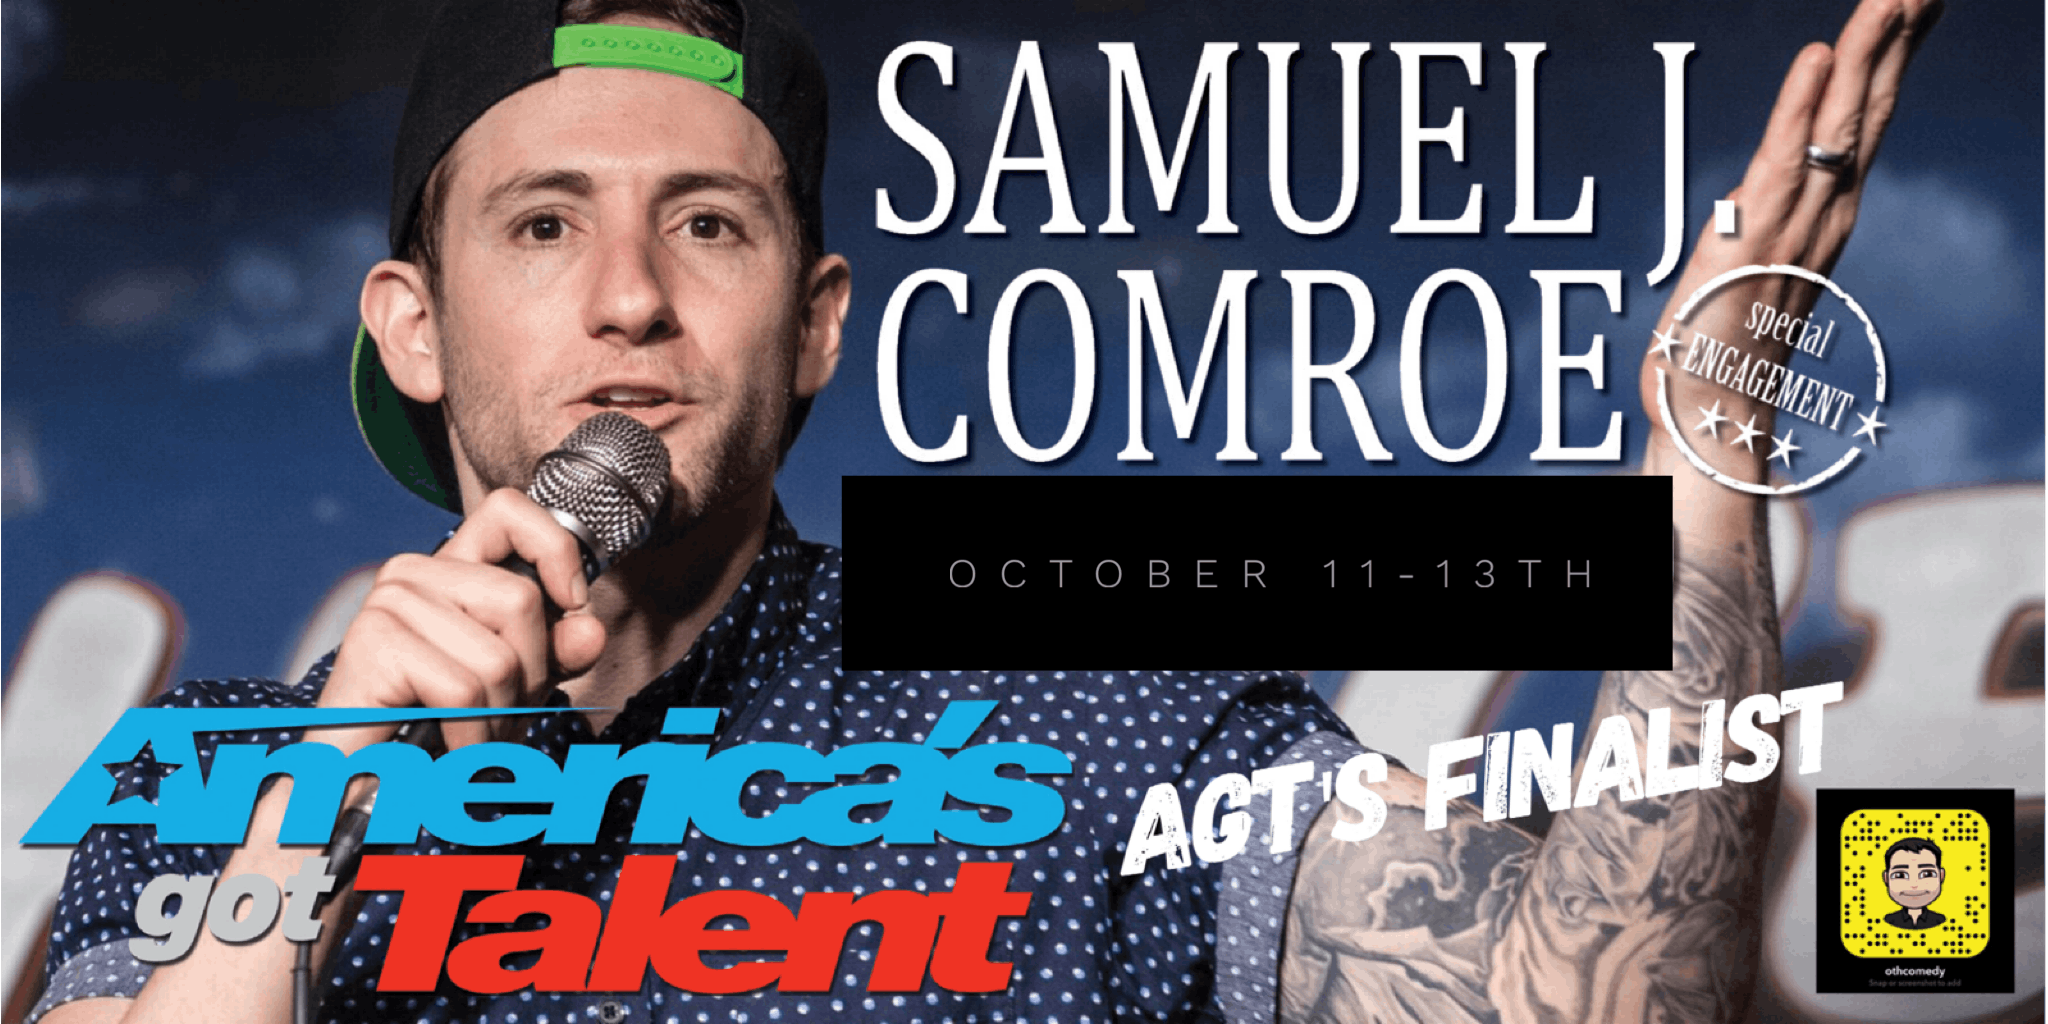 AGT's Finalist Comedian Samuel Comroe live Tour in Naples, Florida